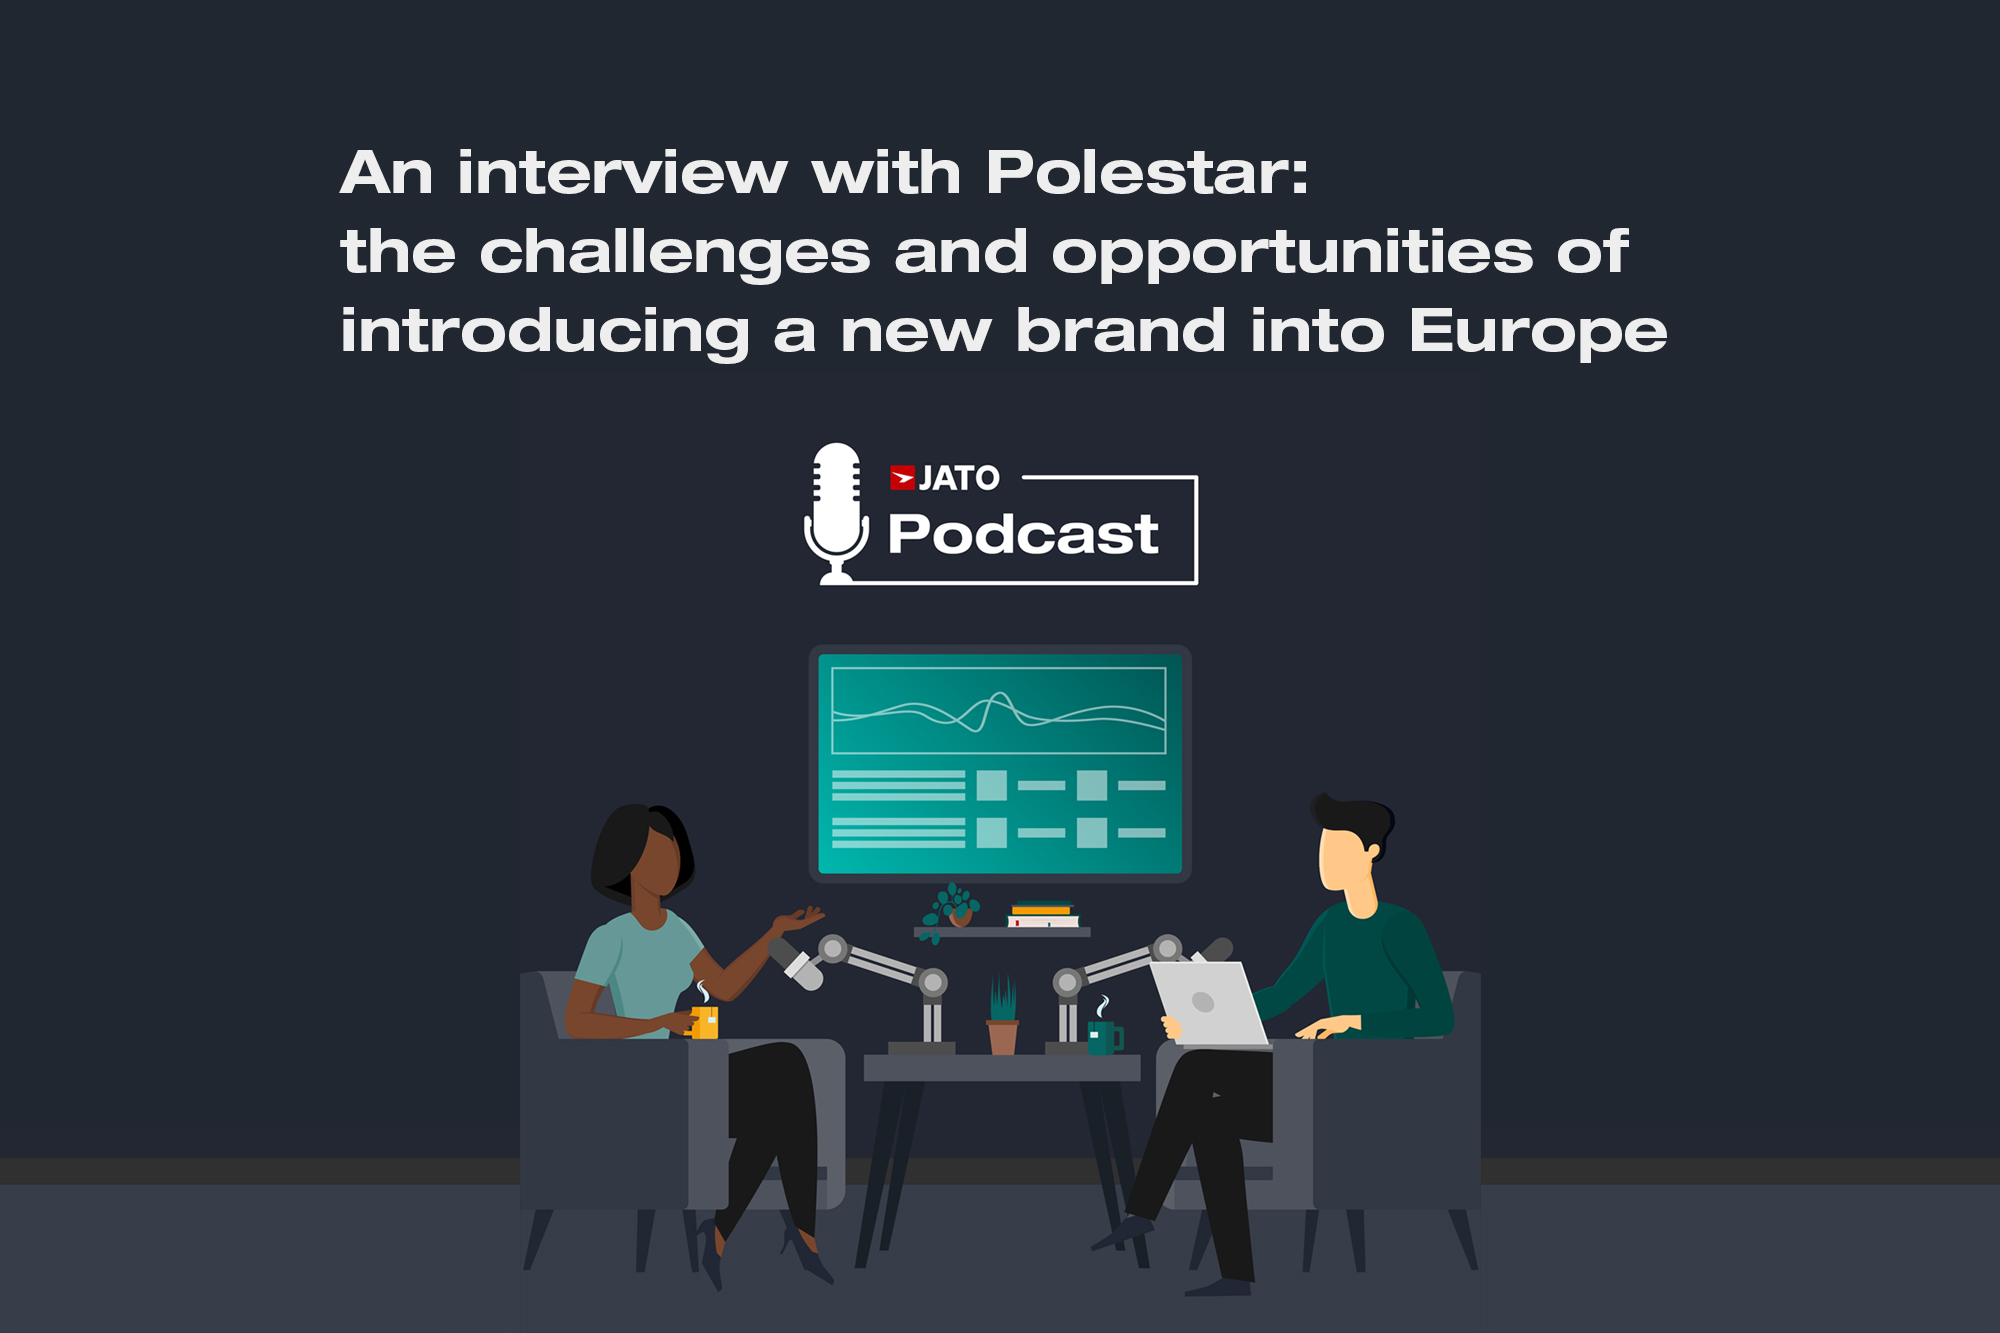 An interview with Polestar - JATO